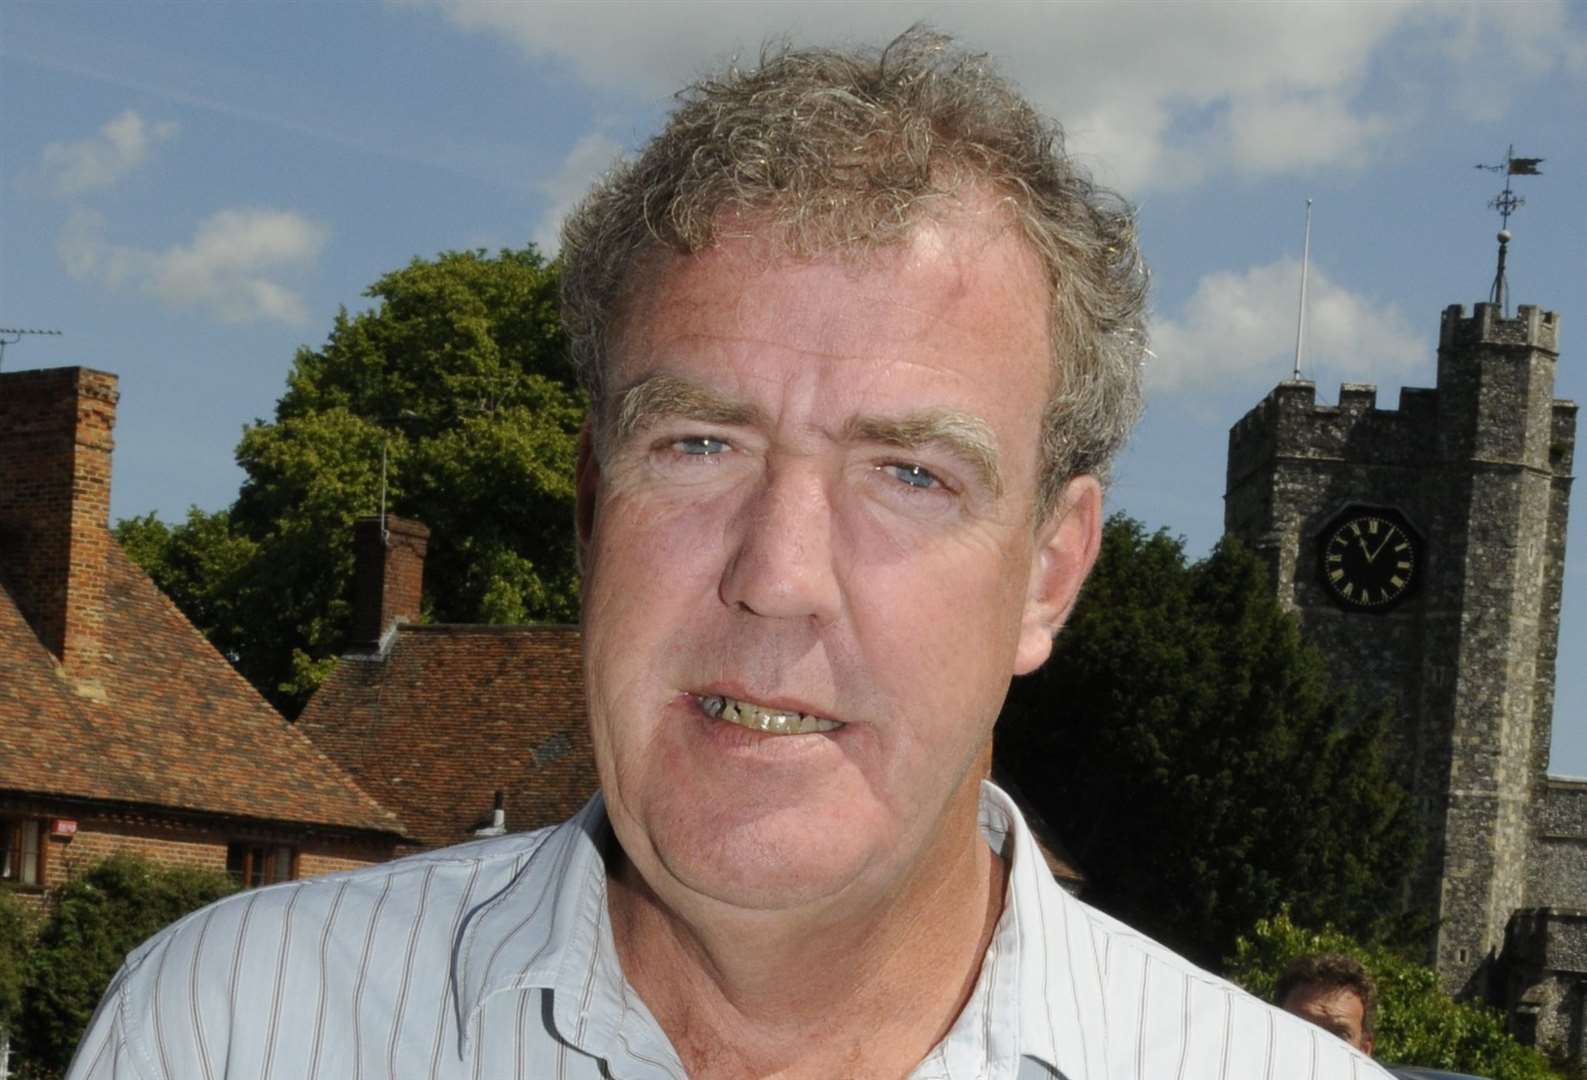 Former TopGear presenter Jeremy Clarkson criticised the scheme